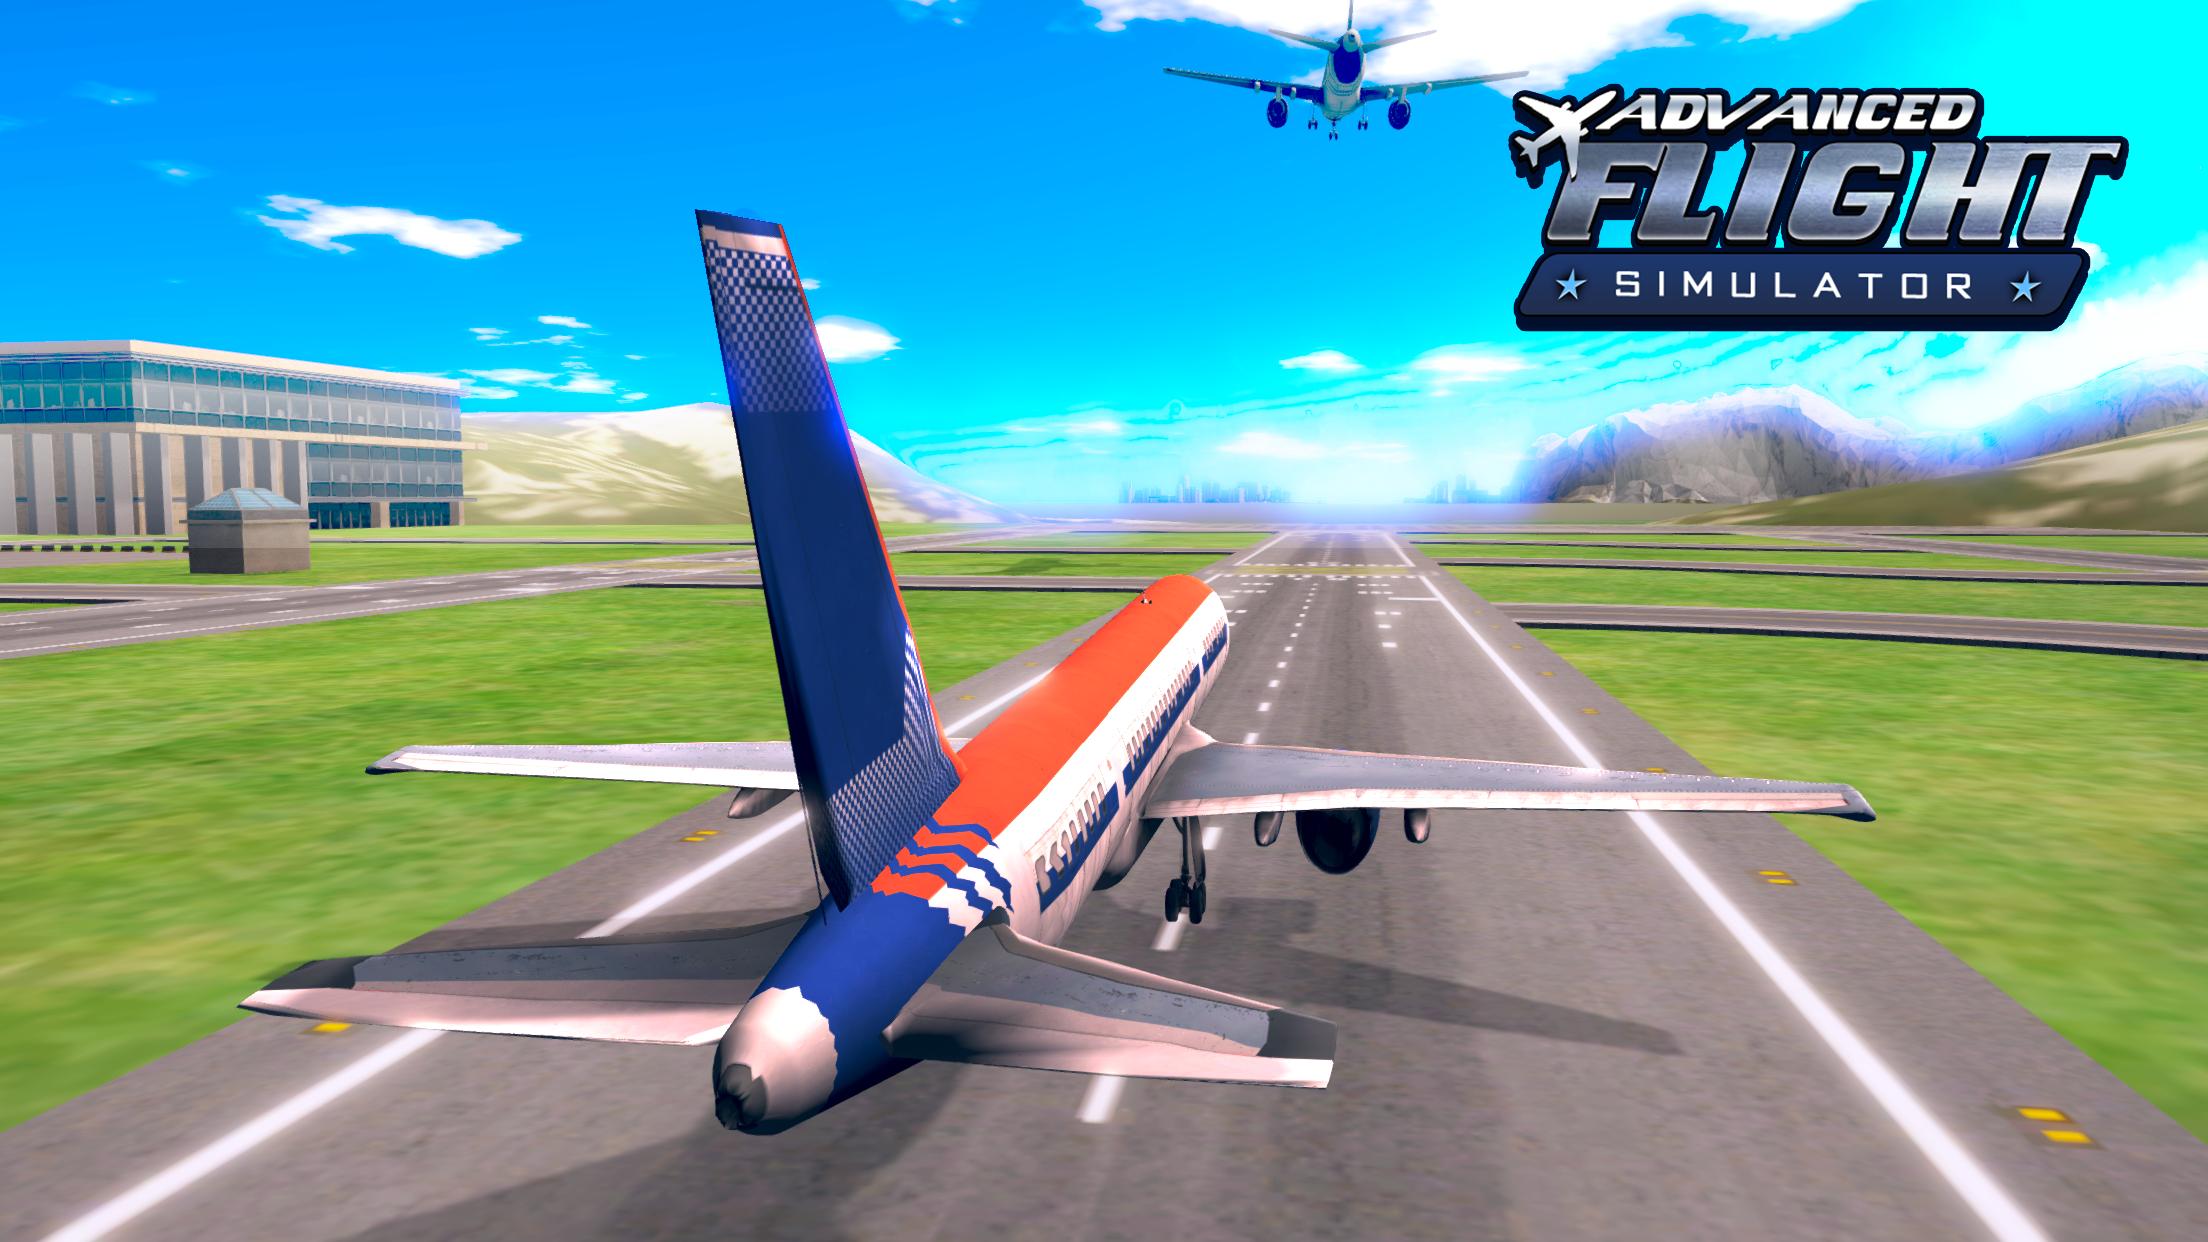 Airplane Real Flight Simulator 2020 For Android Apk Download - 2020 flight simulator roblox